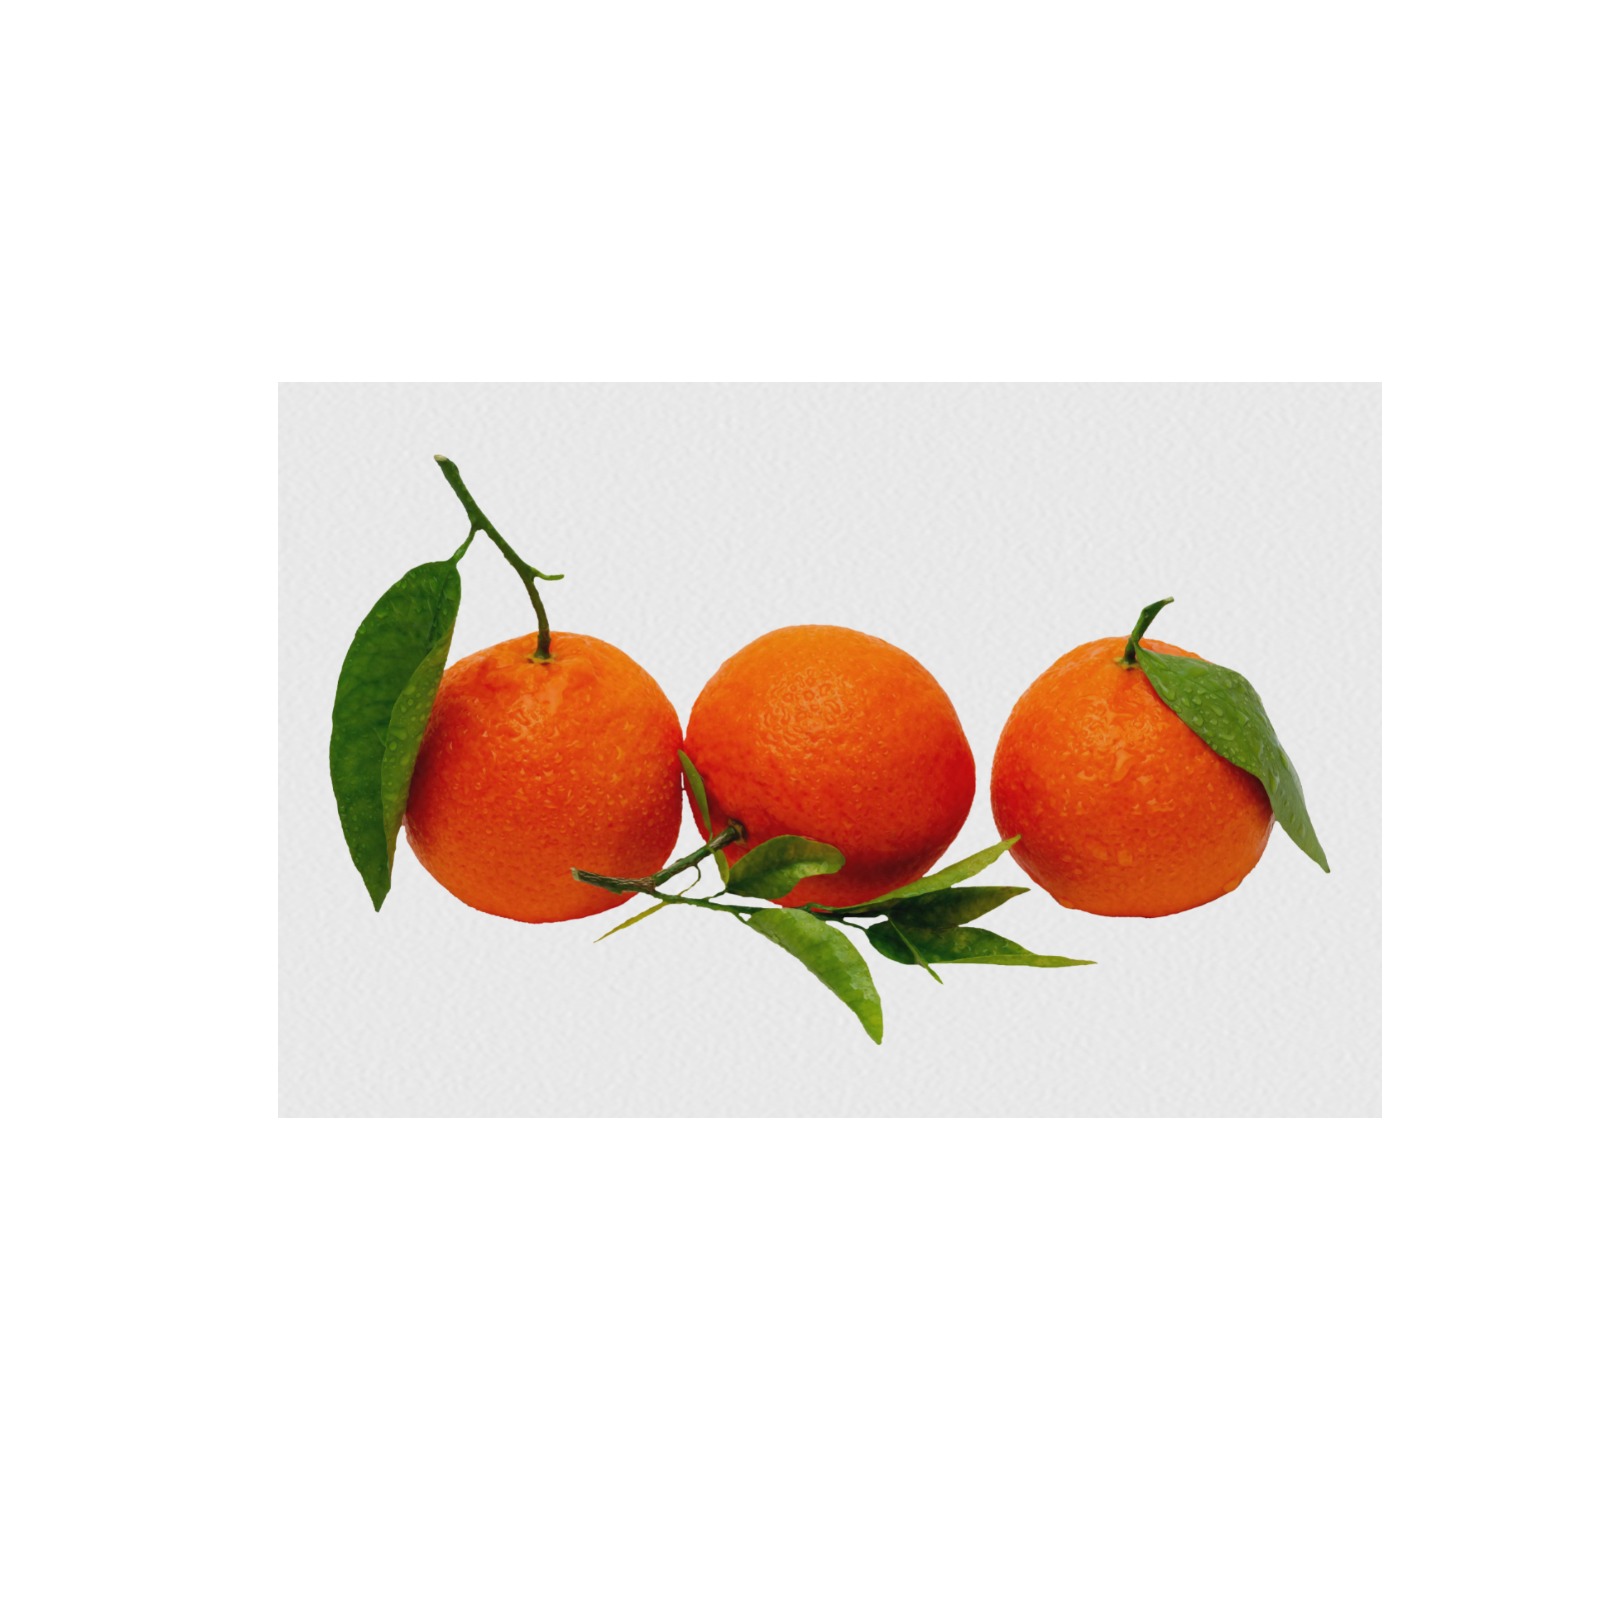 Three Sweet Orange Tangerine Fruits Frame Canvas Print 48"x32"